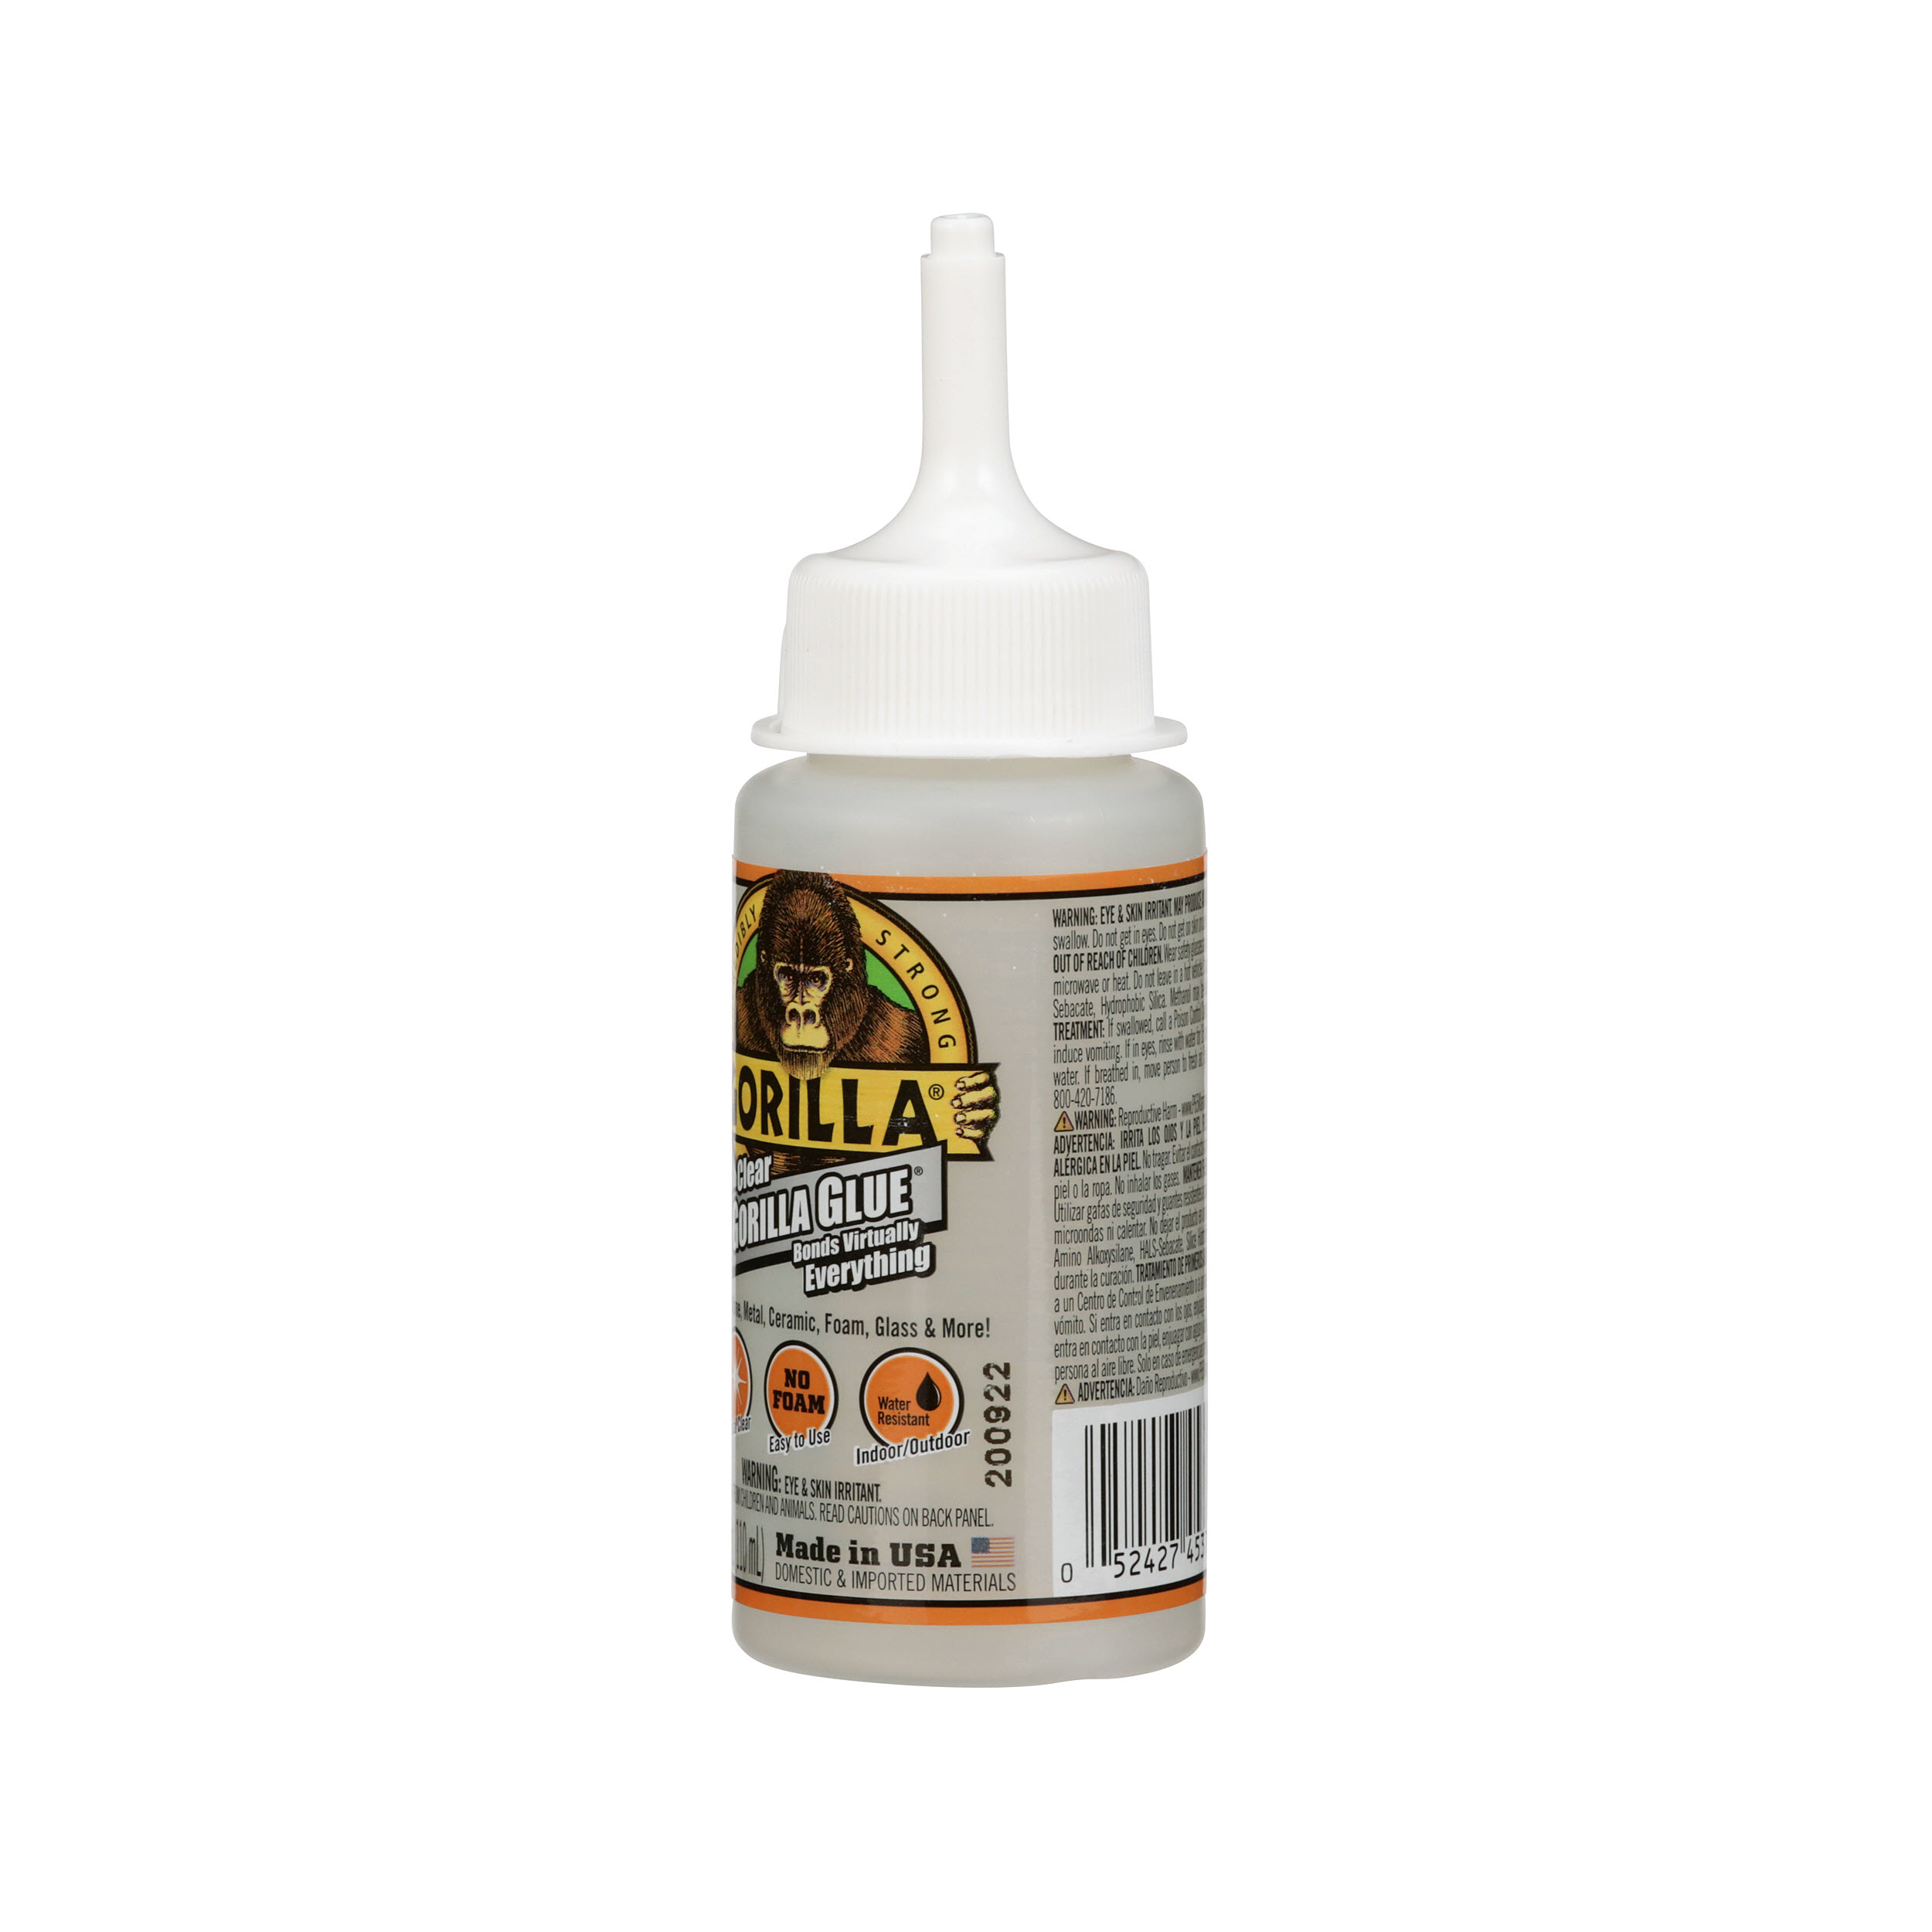 Gorilla® Clear All-Purpose Glue, 3.75 oz - Kroger